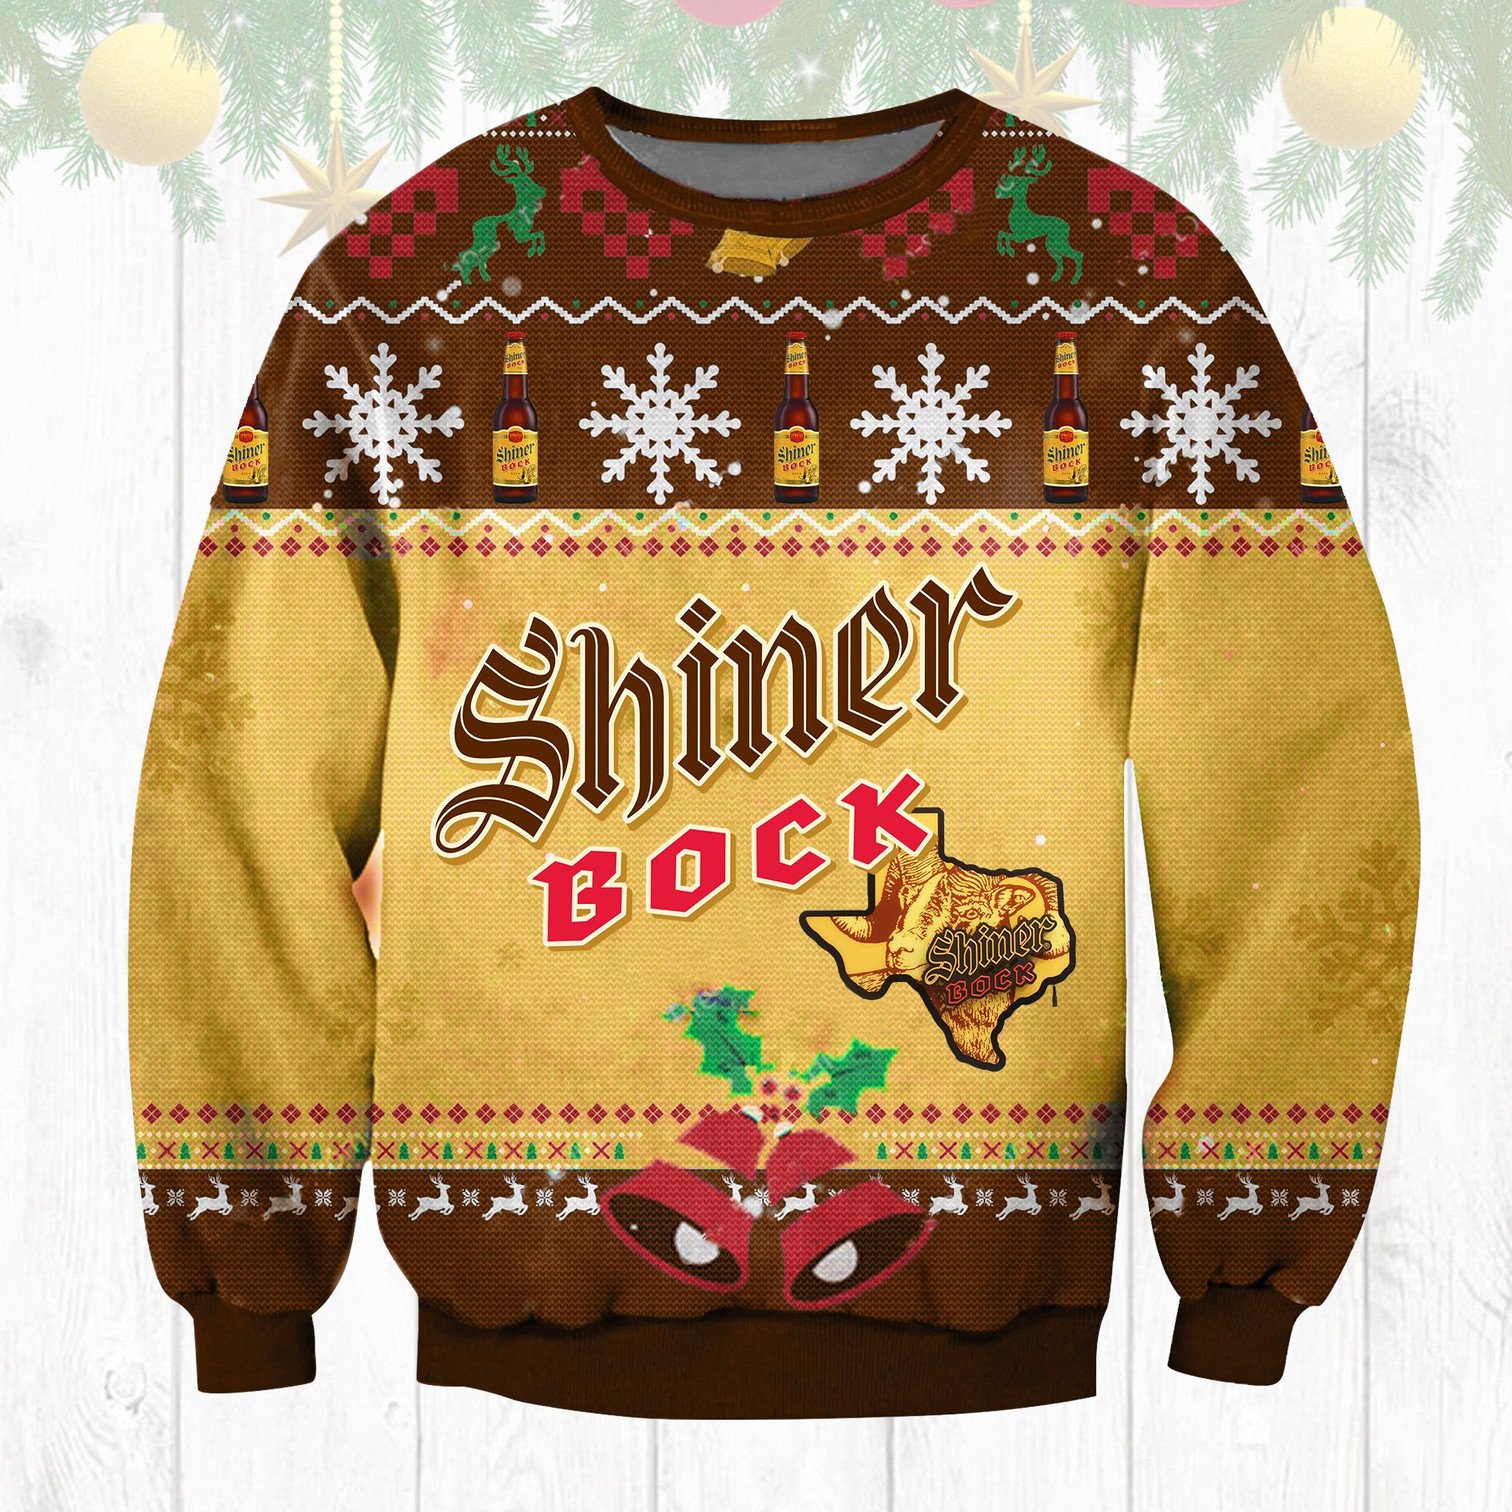 Shiner Bock Beer Christmas Ugly Sweater